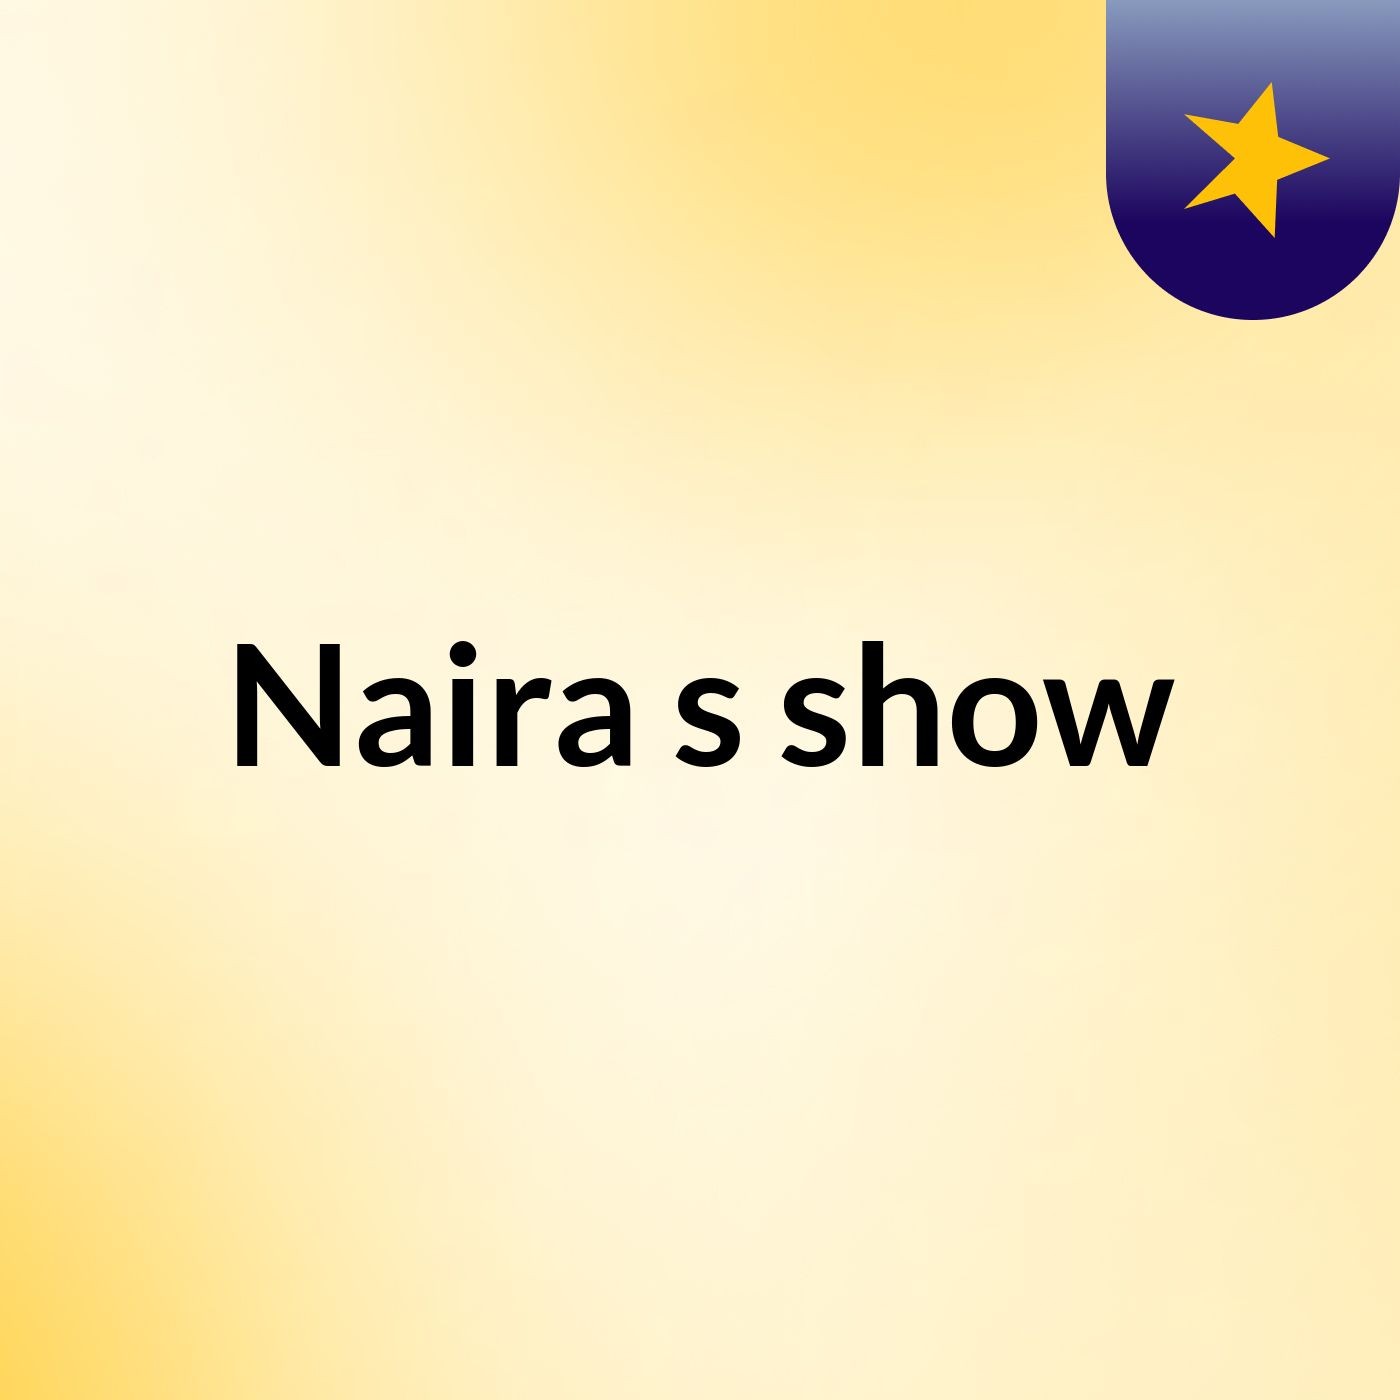 Naira's show